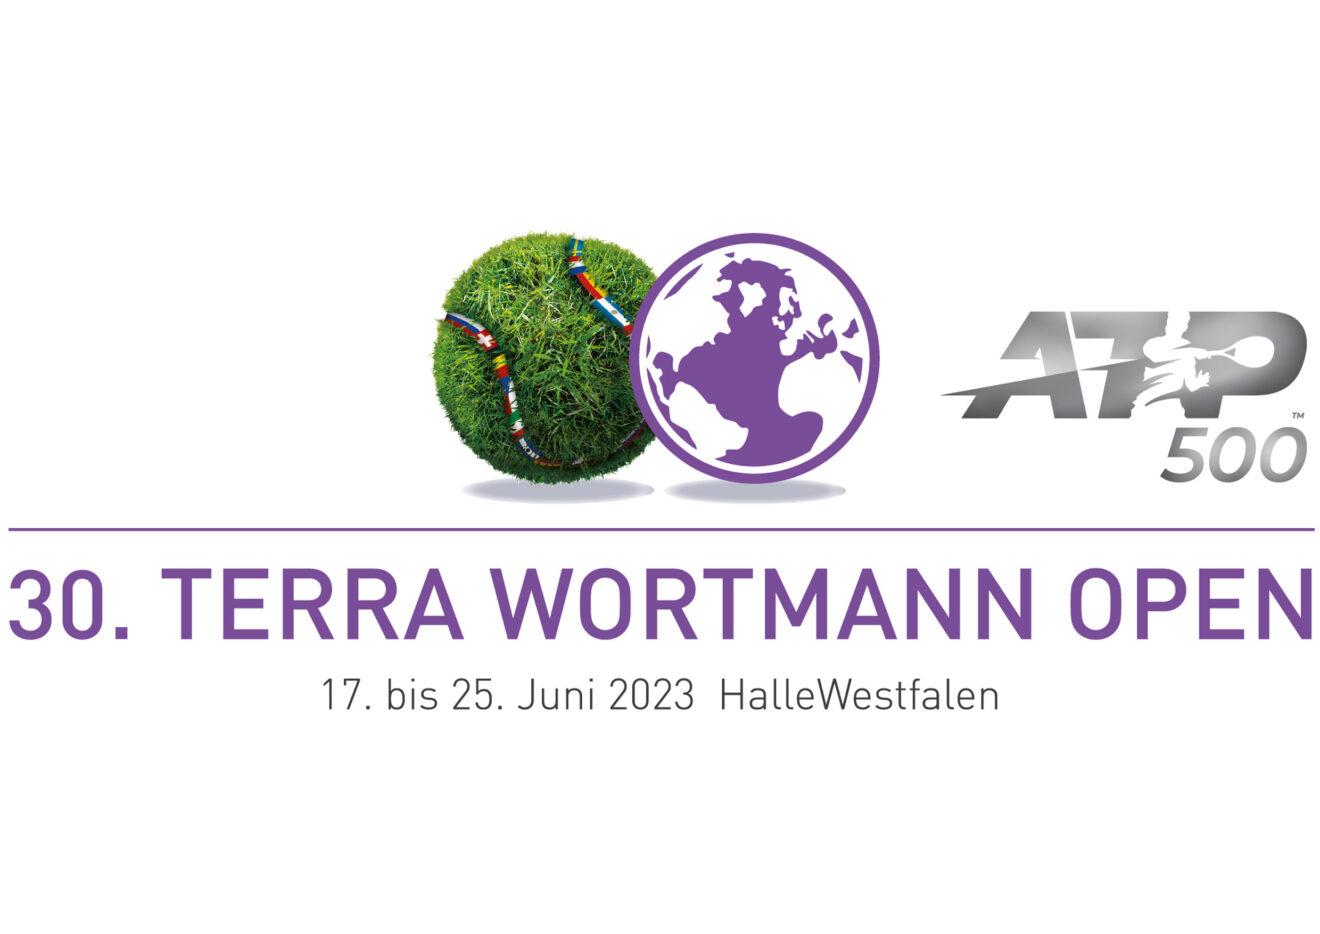 Informationen zur unserer Fahrt zu den Terra Wortmann Open am 20.06.